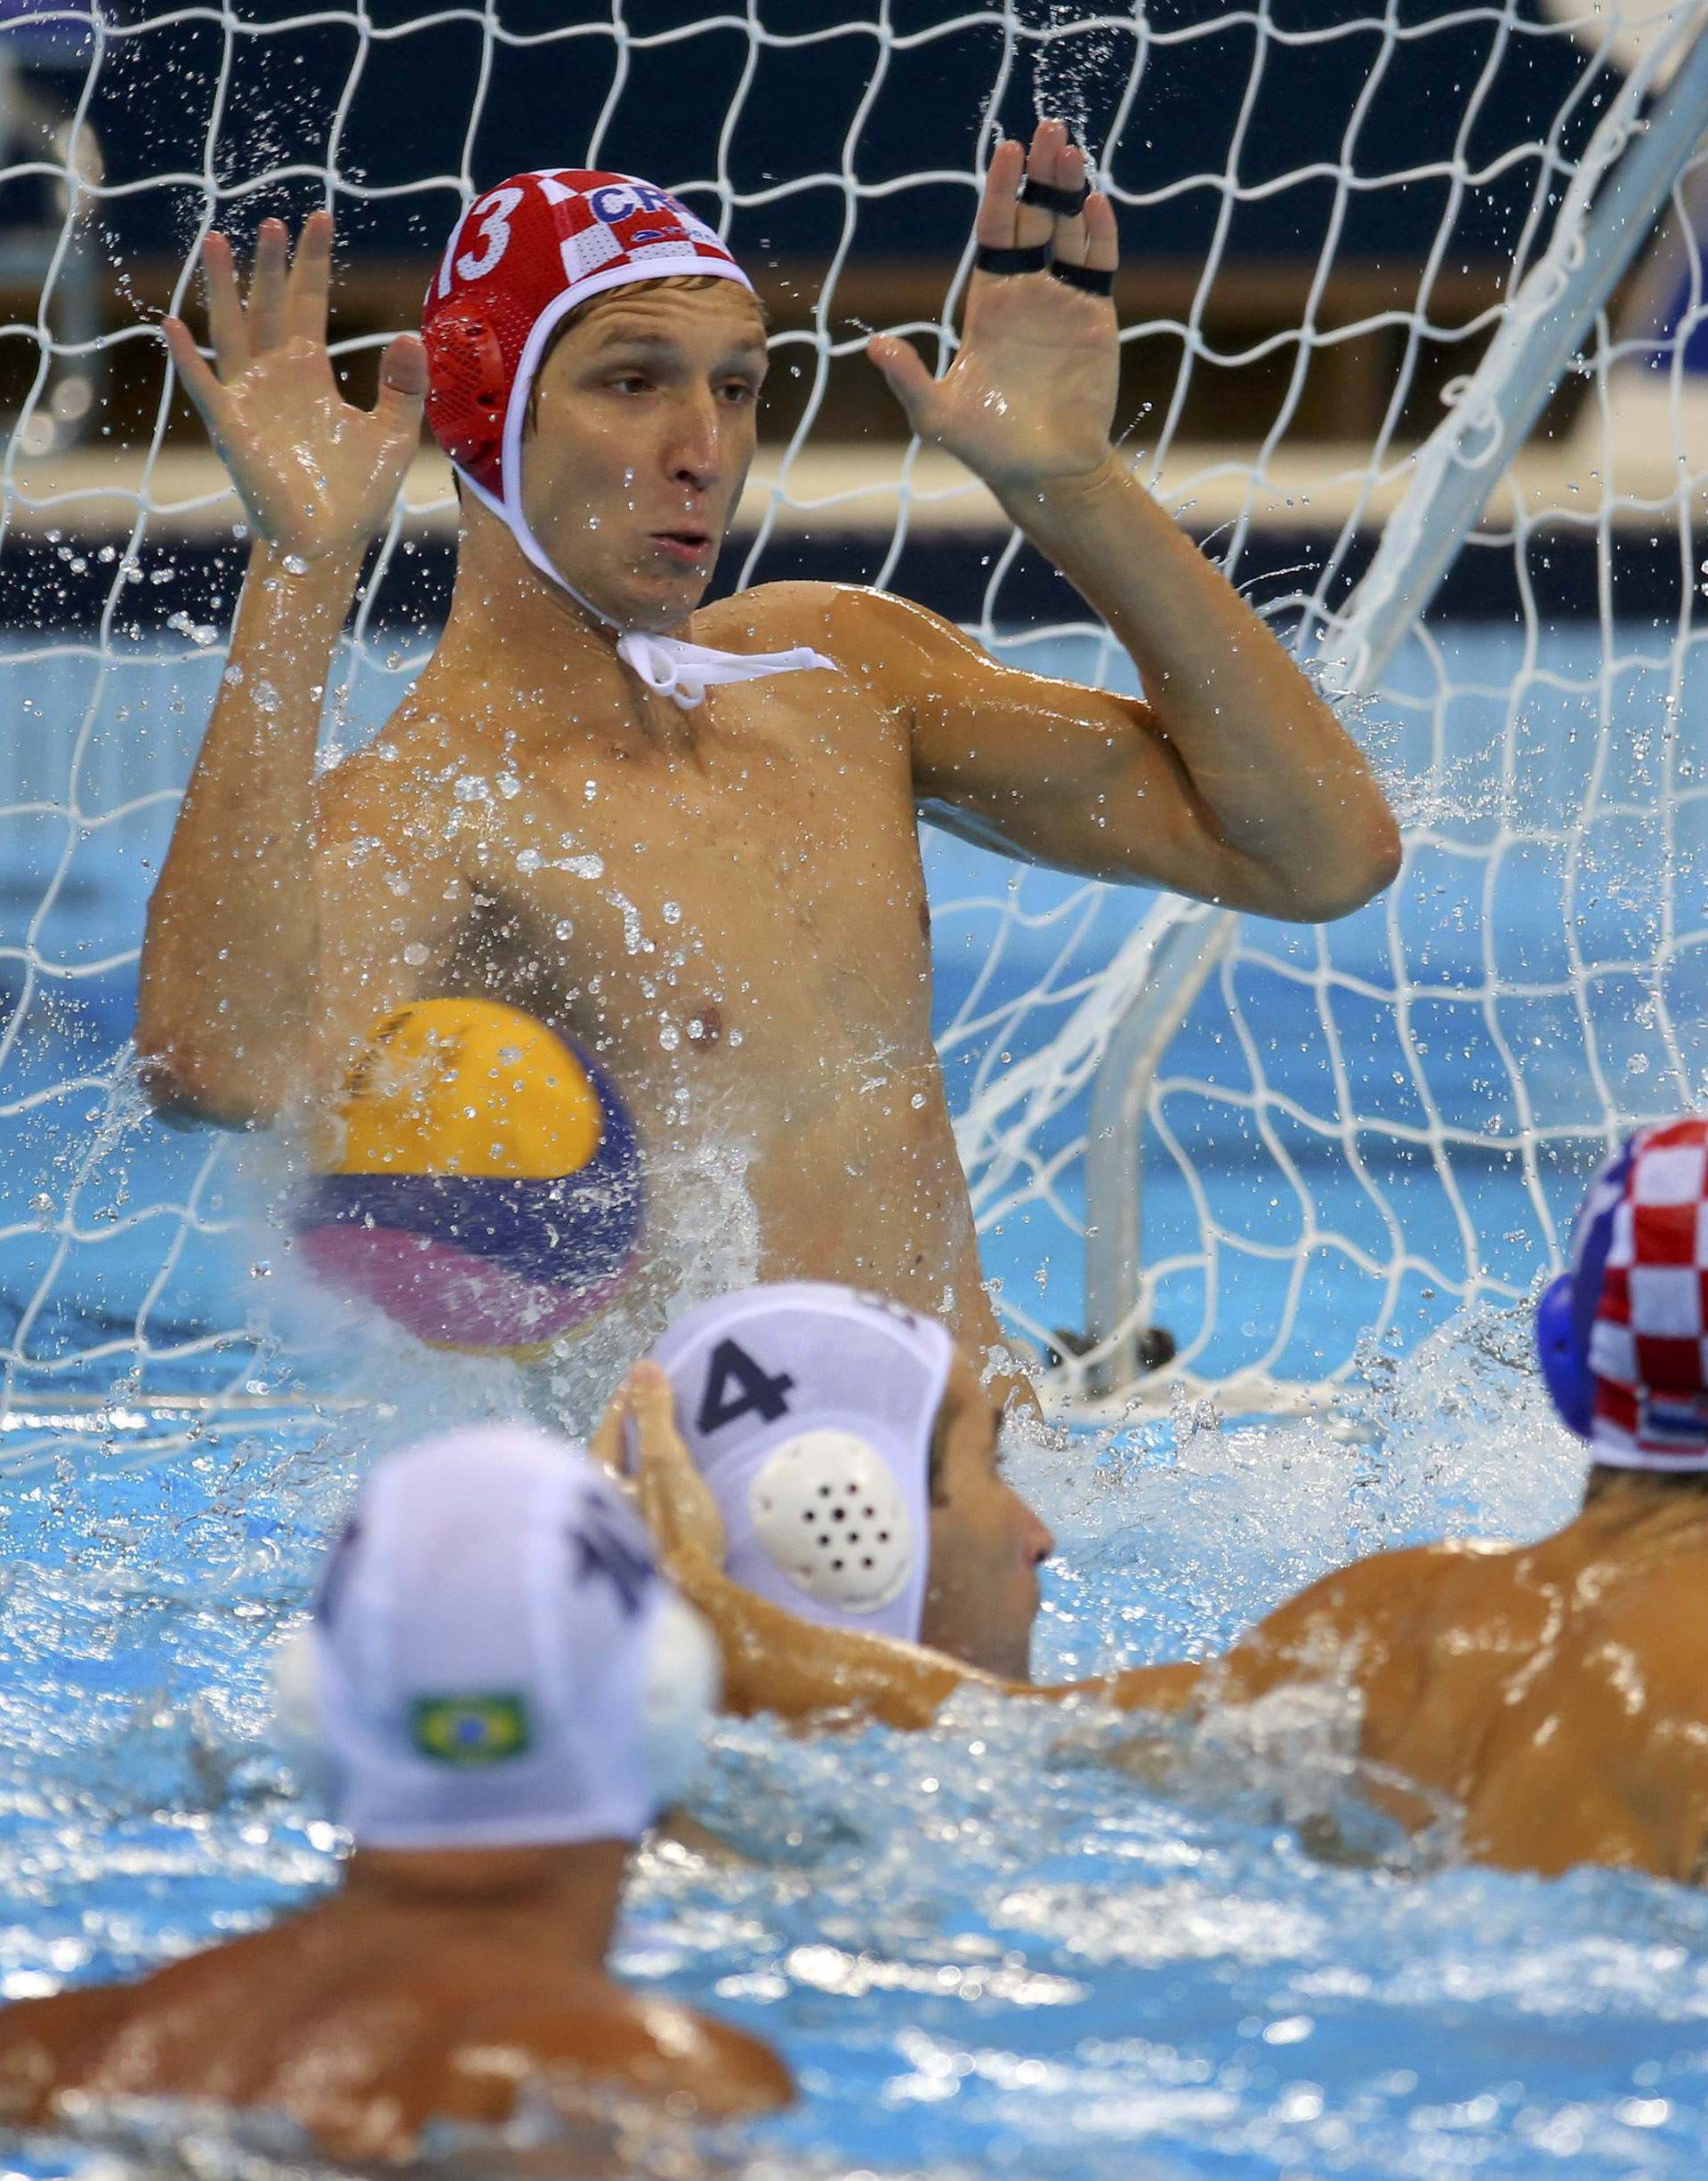 Water Polo - Men's Quarterfinal Brazil v Croatia